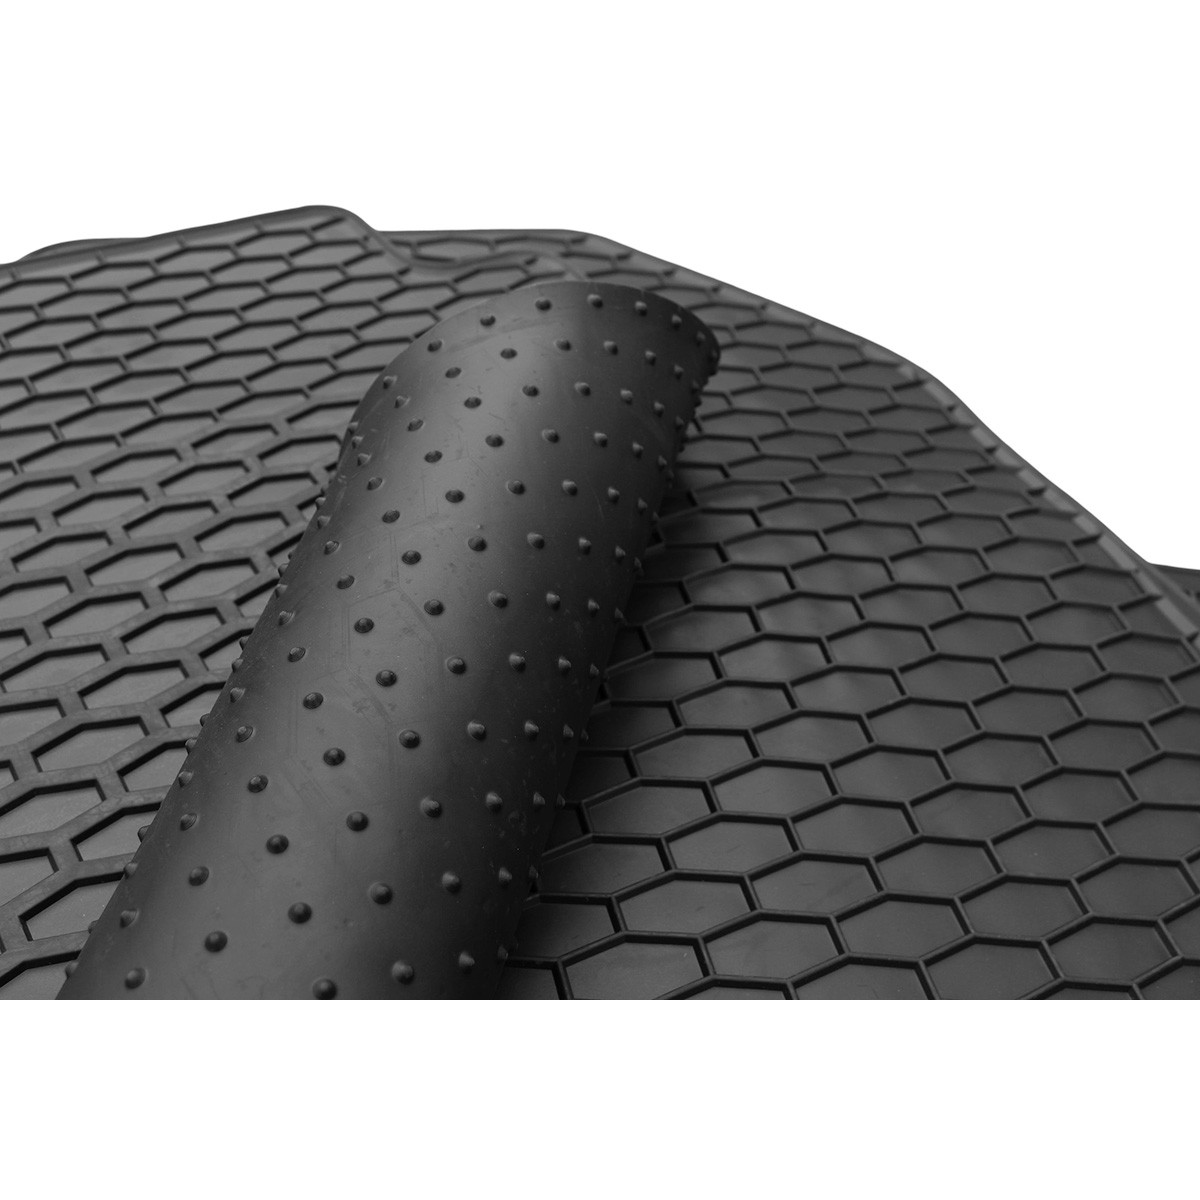 Rubber mats VOLKSWAGEN Golf VI 2008-2013 (, oval clips) / P223308 / black